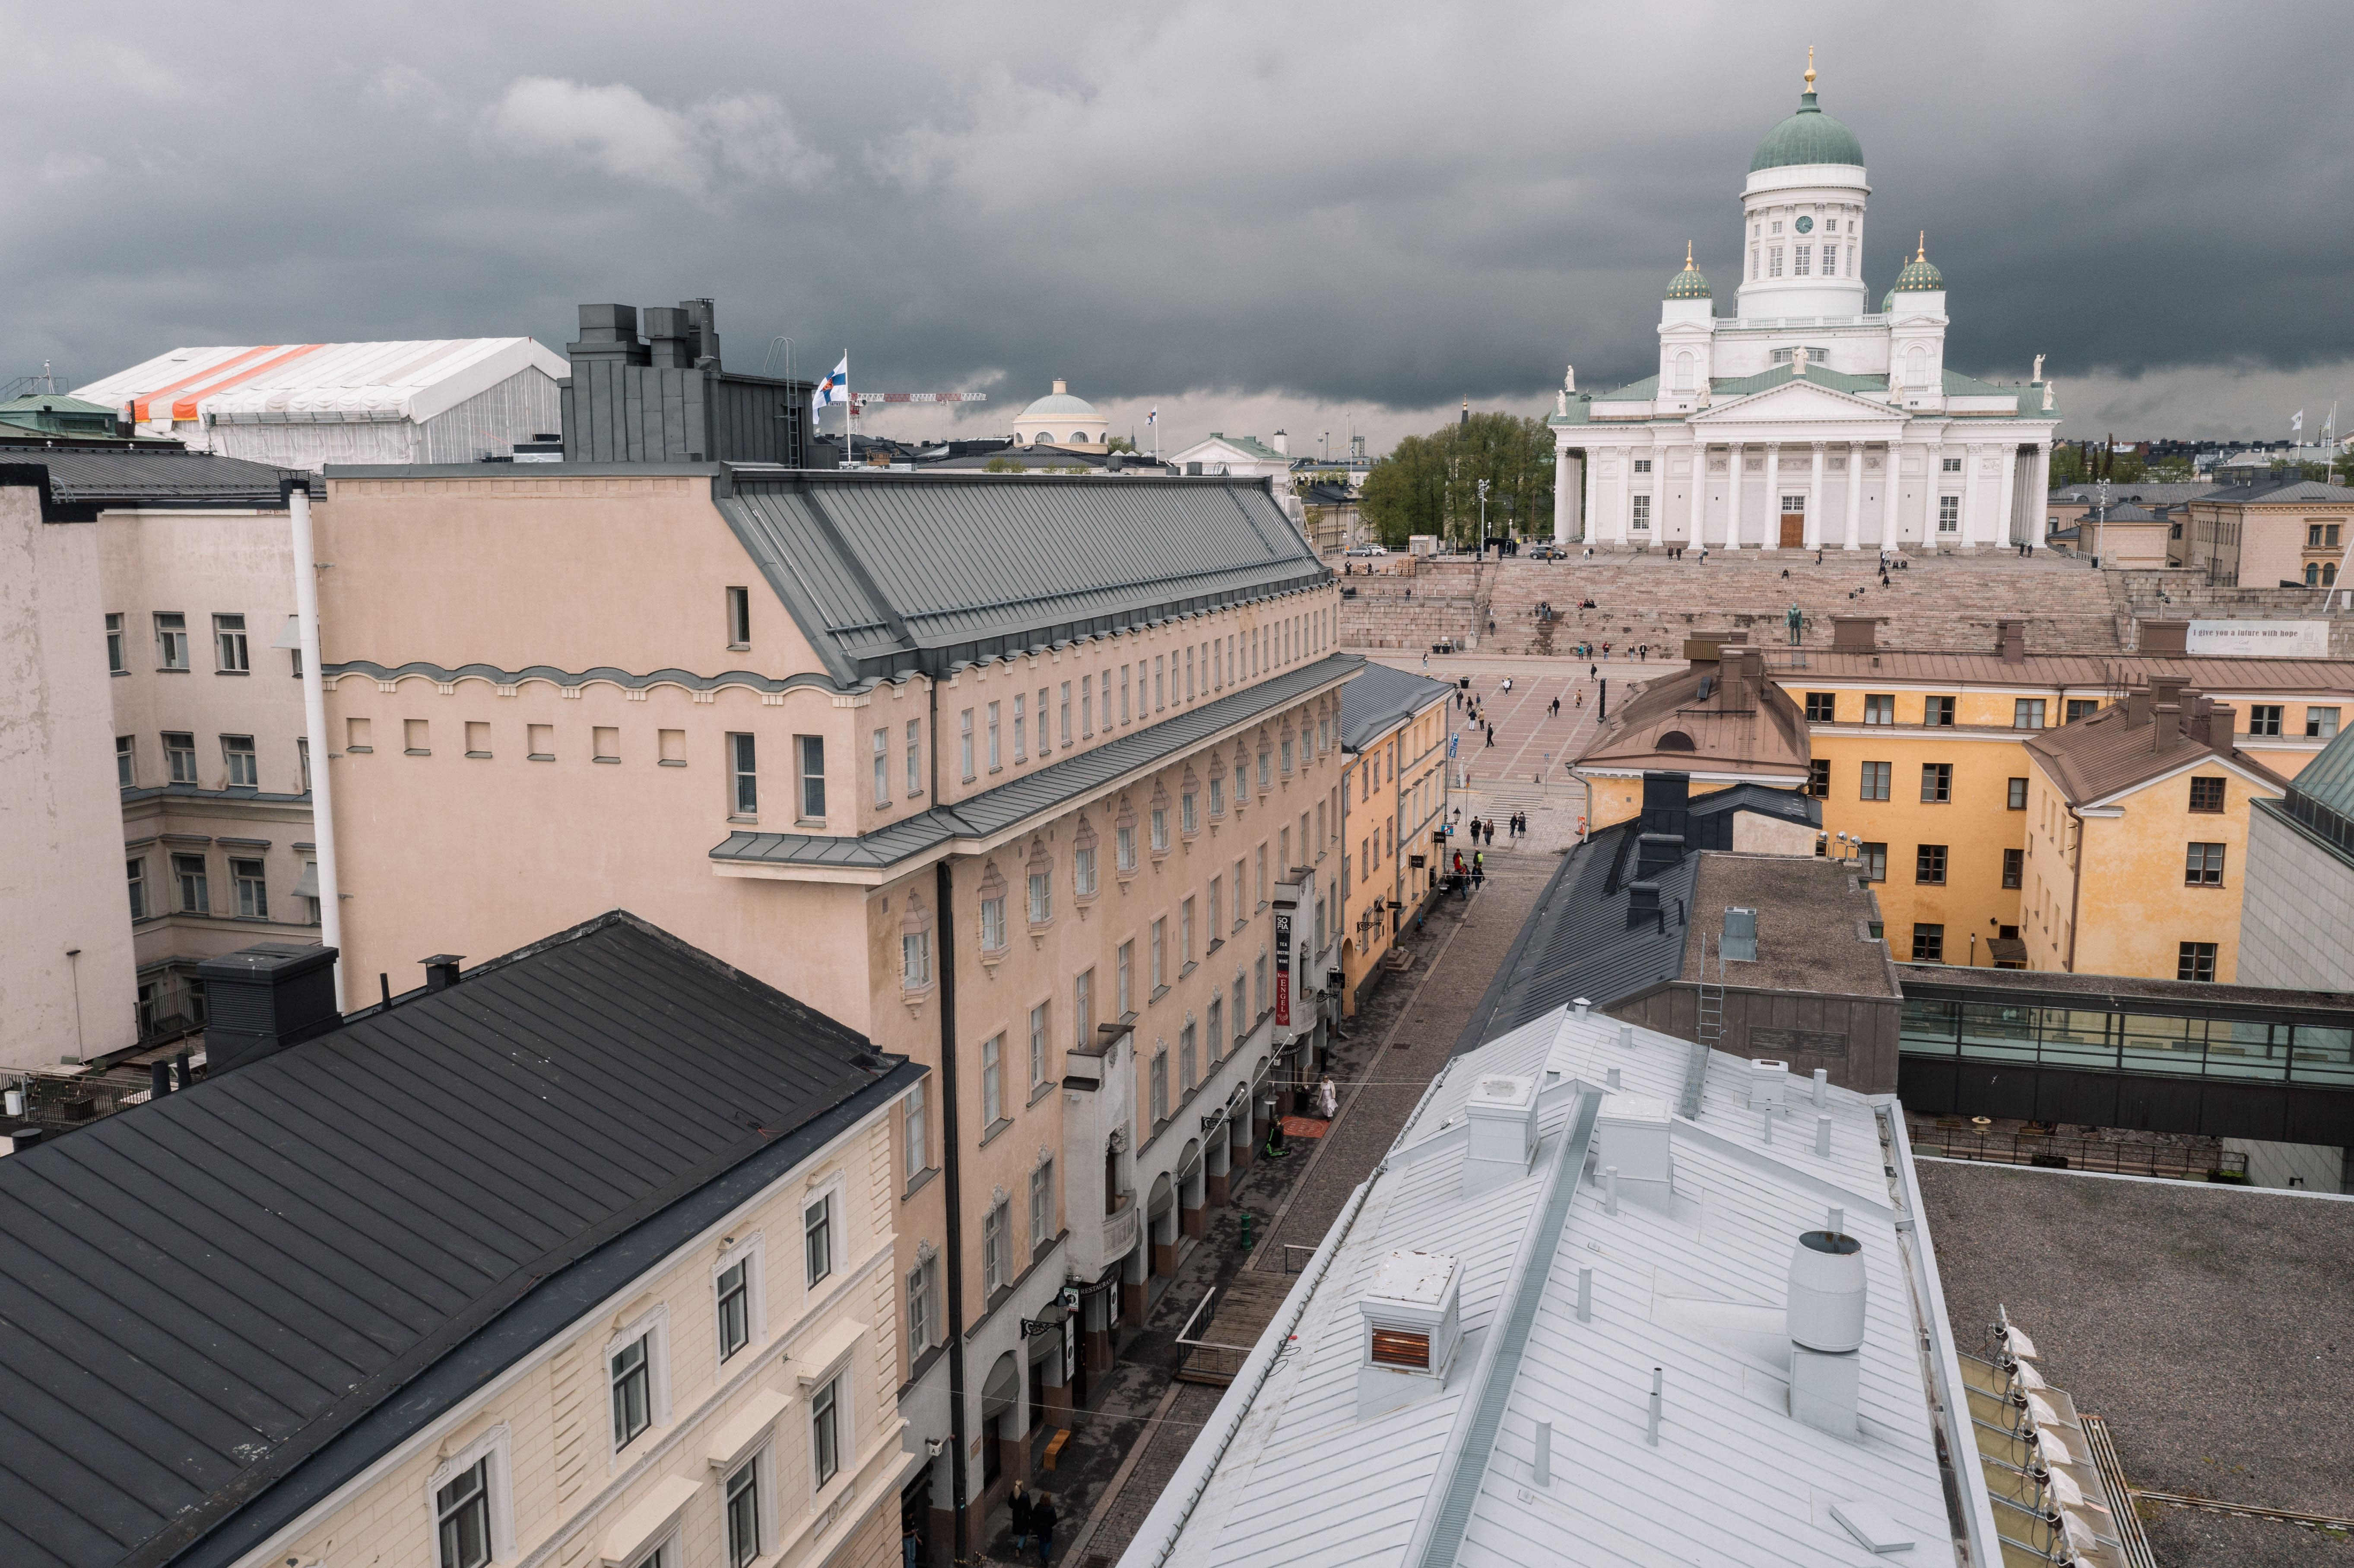 The city’s employees suffer from major wage disturbances in Vantaa, Helsinki